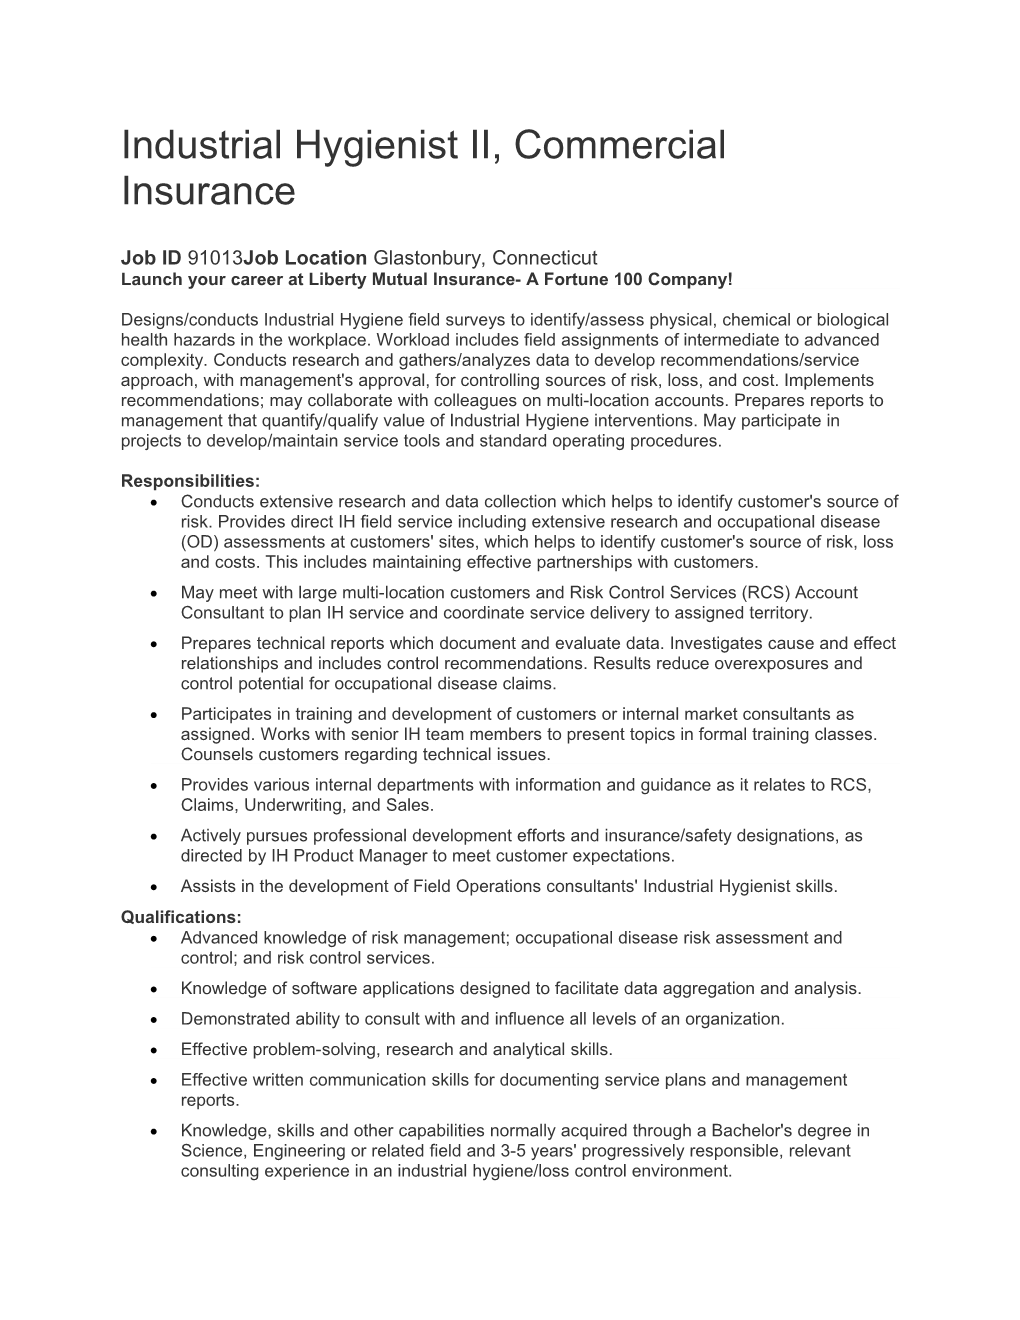 Liberty Mutual Insurance - Industrial Hygienist II